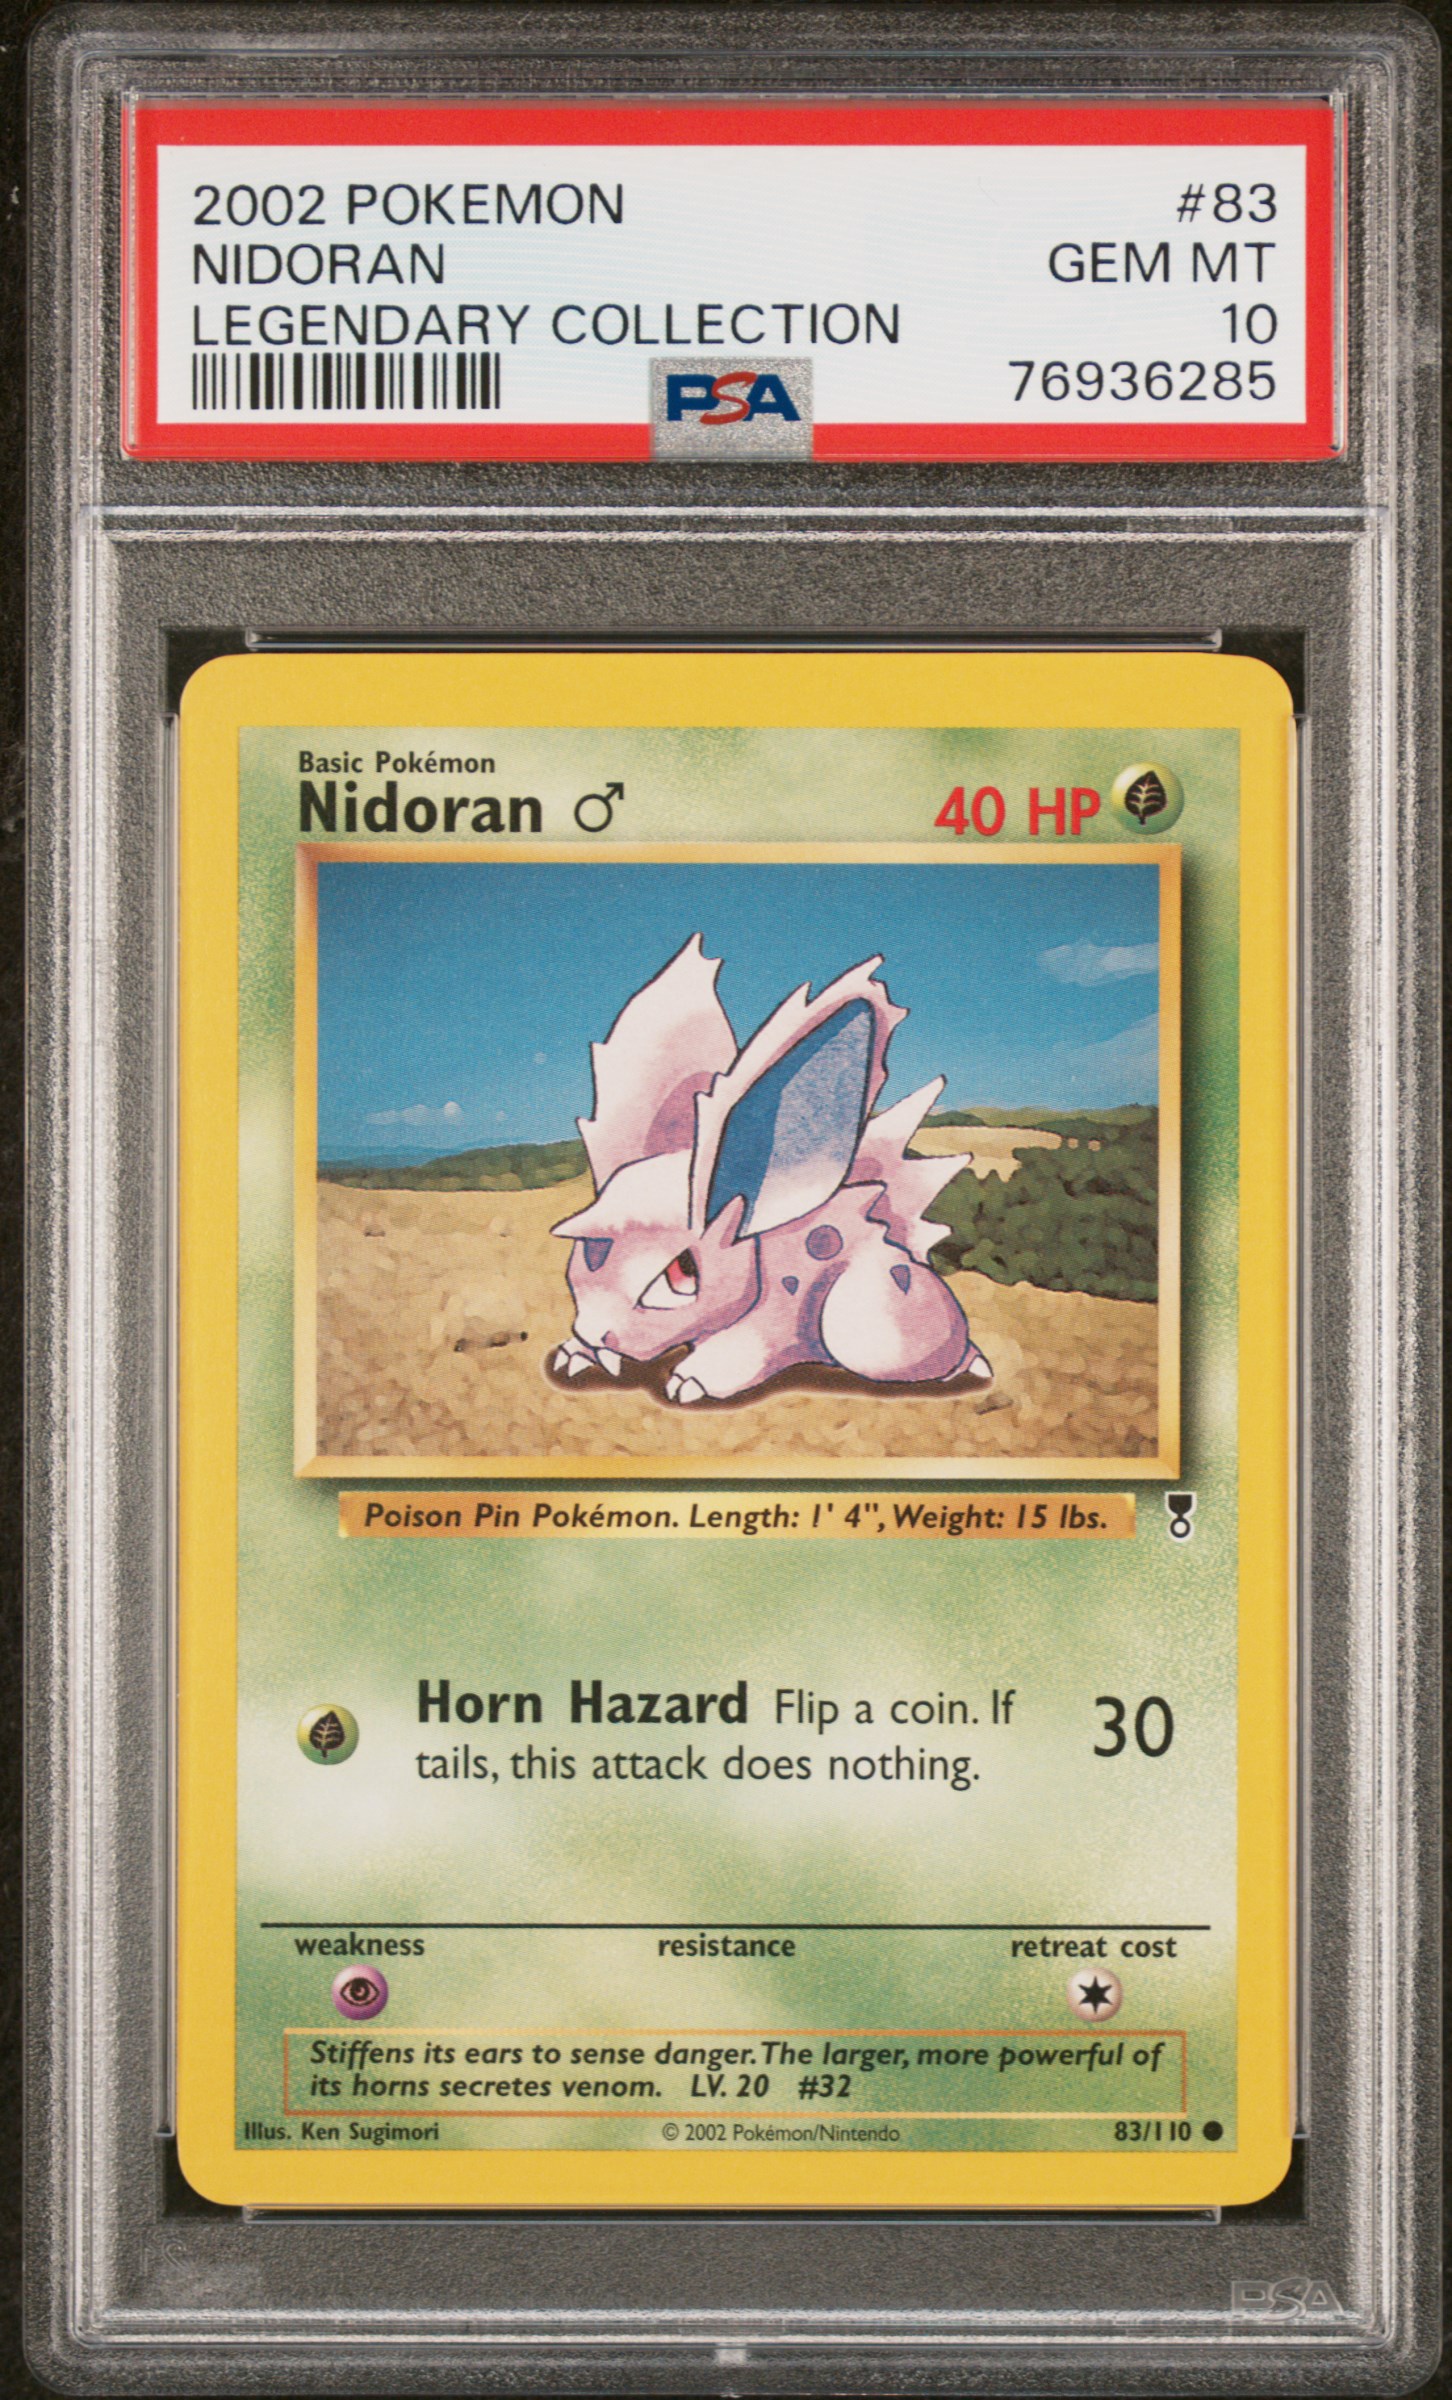 2002 Pokemon Legendary Collection 83 Nidoran – PSA GEM MT 10